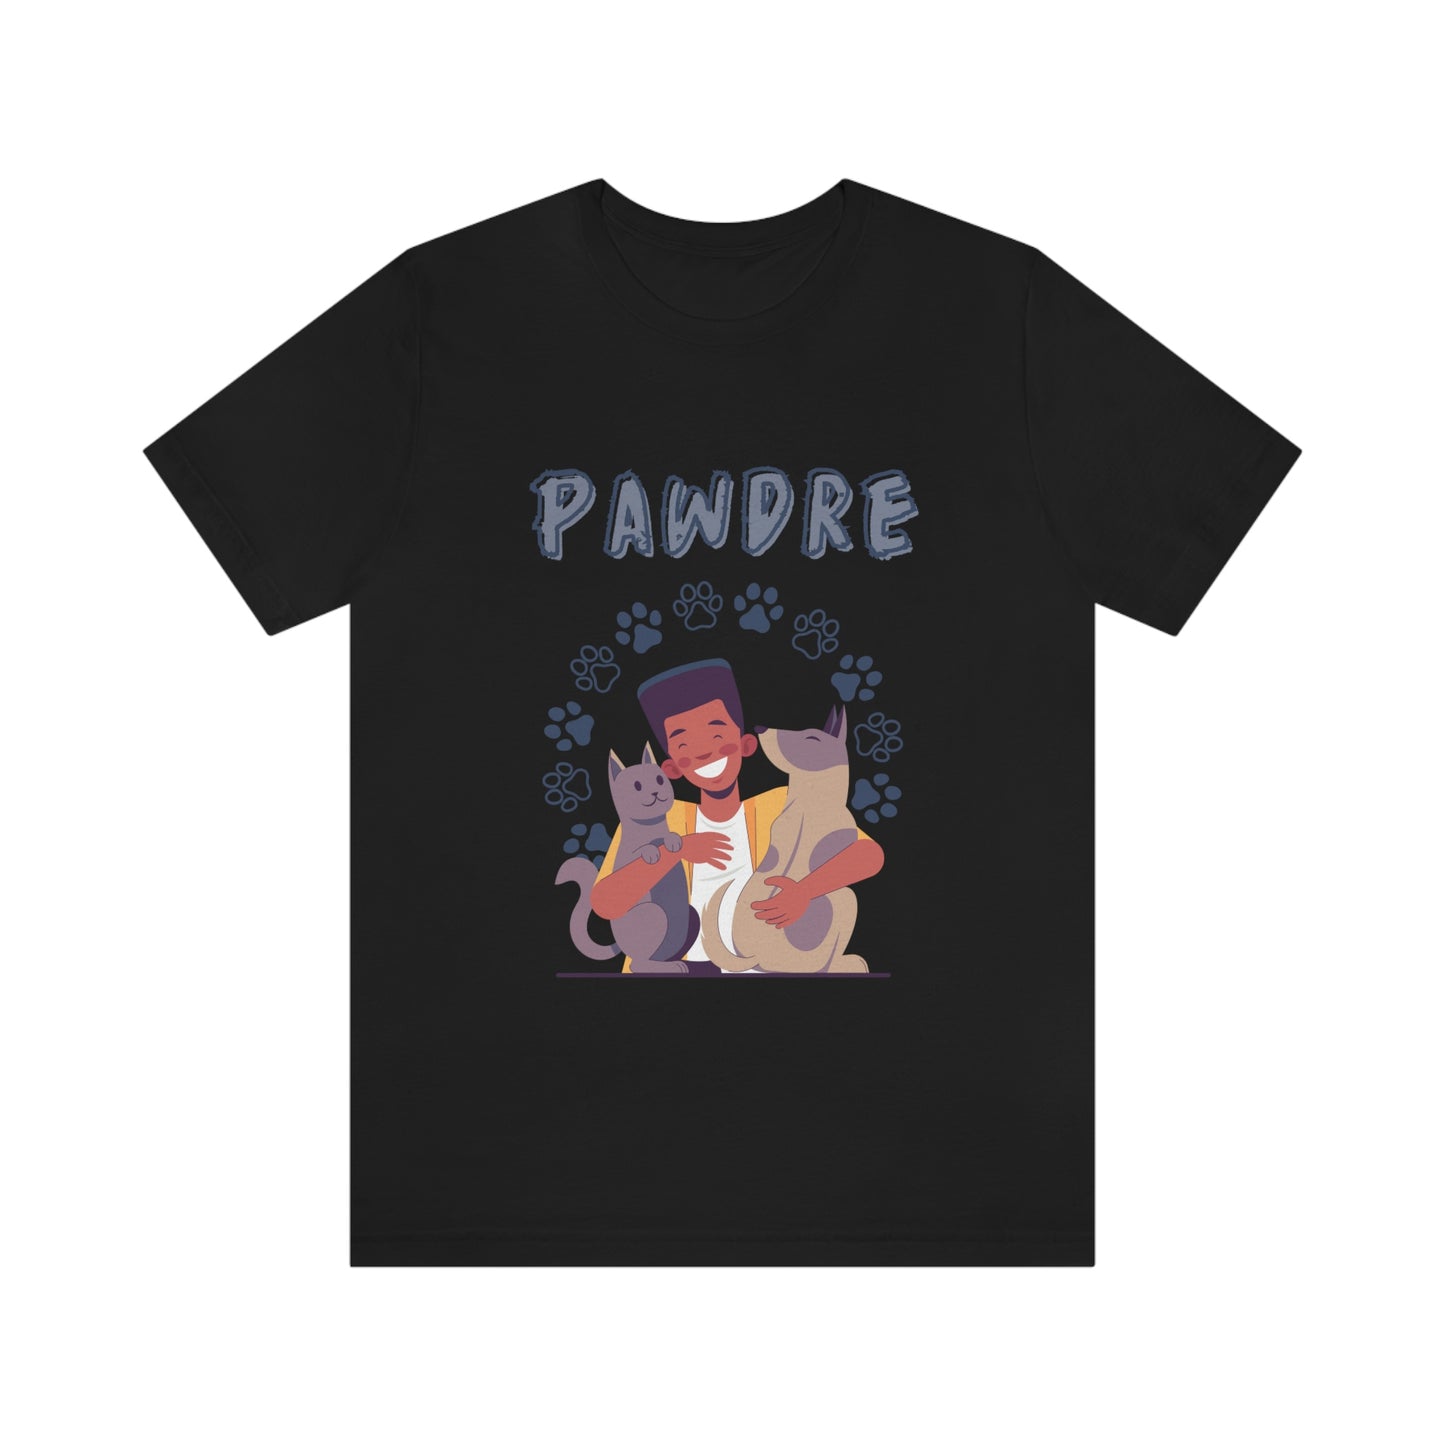 Pawdre - Unisex T-Shirt